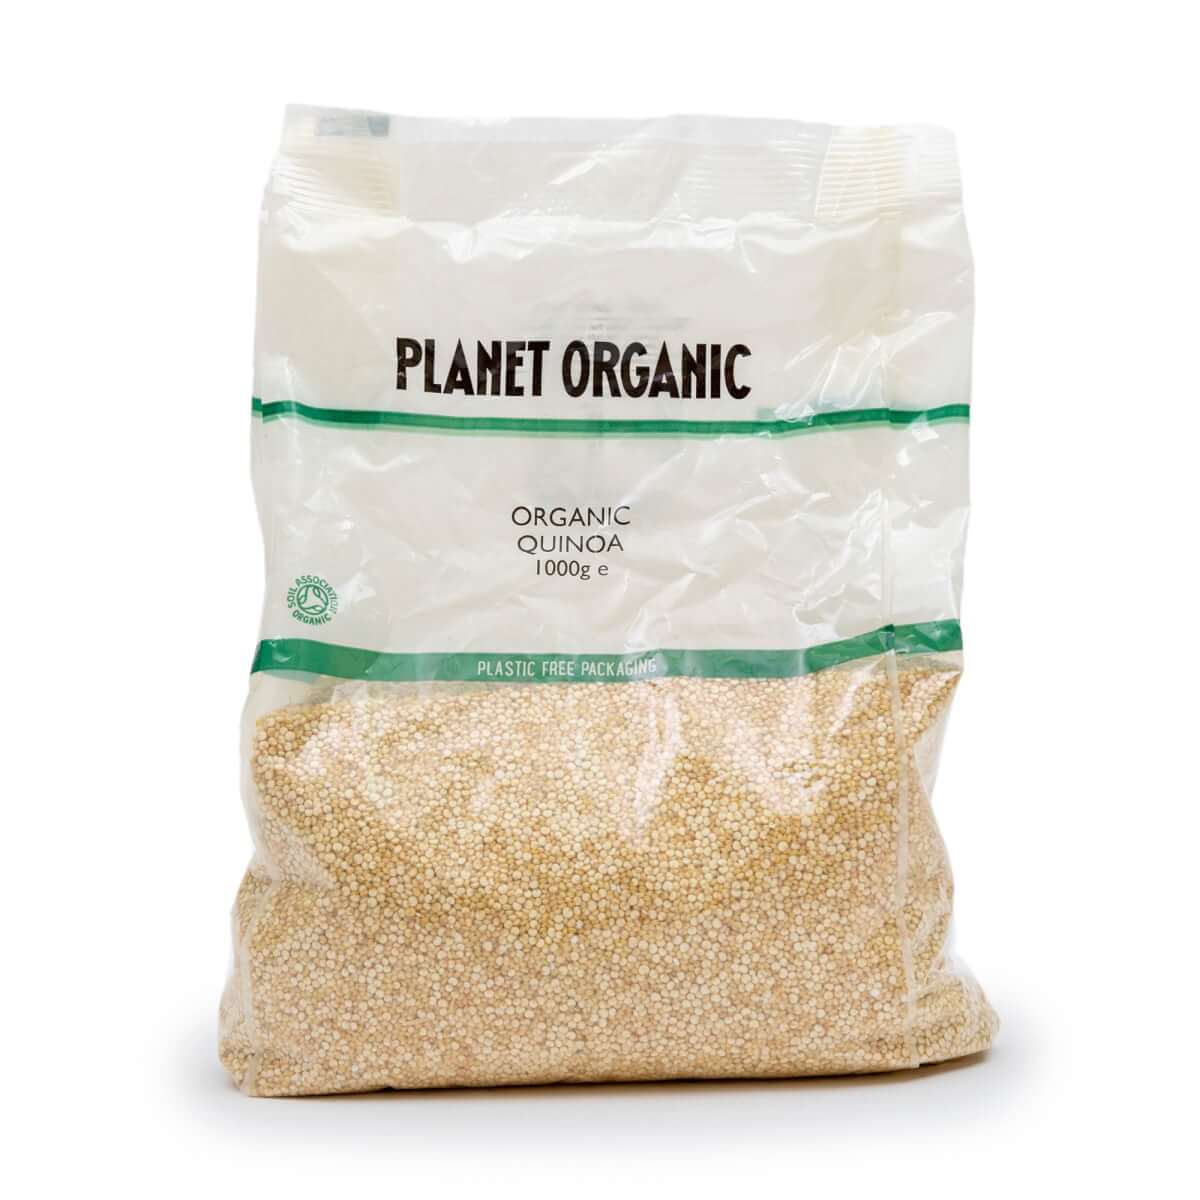 Planet Organic Quinoa 1kg £6.00